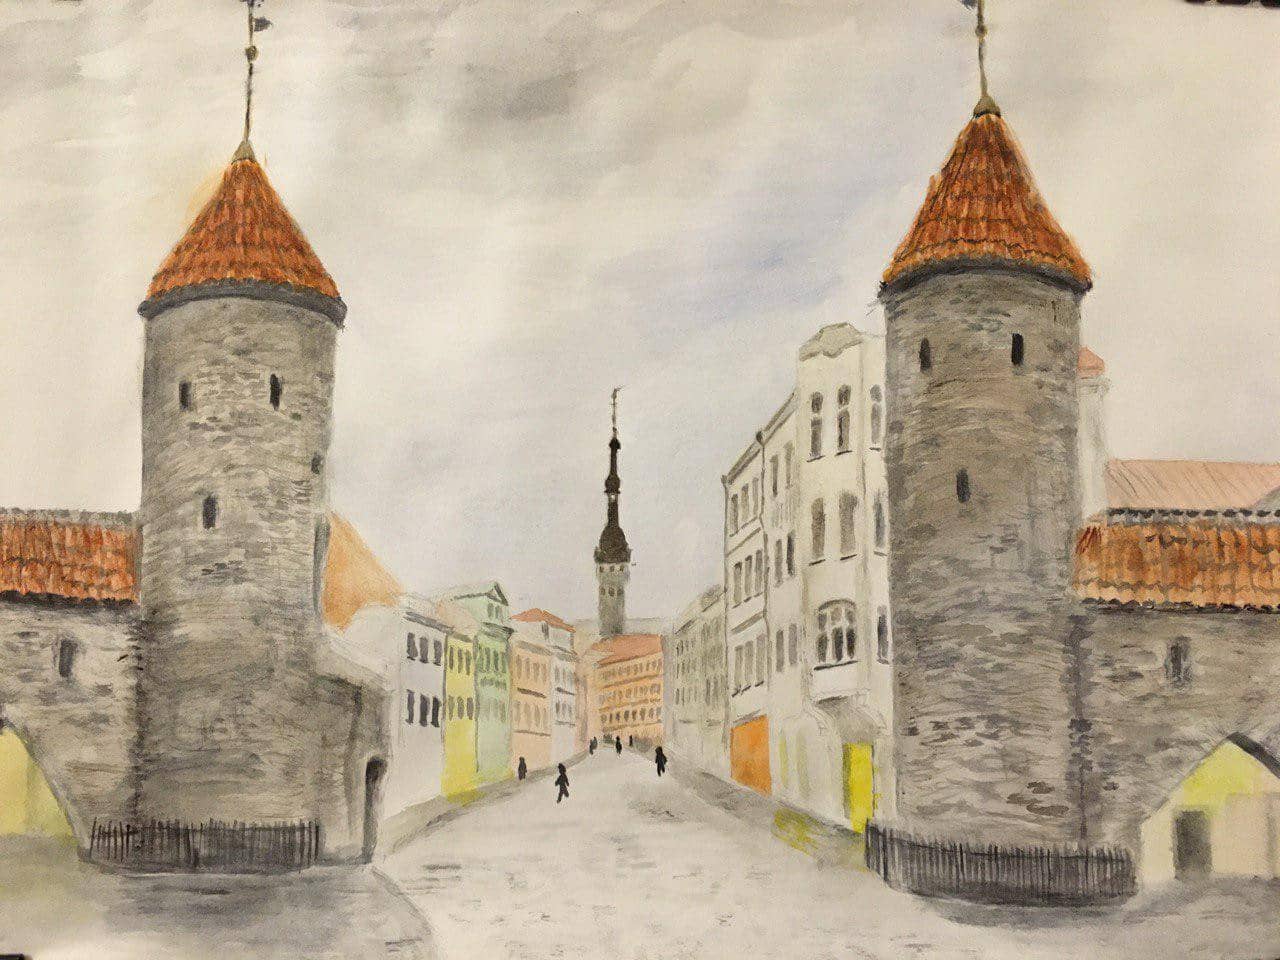 The Old Tallinn